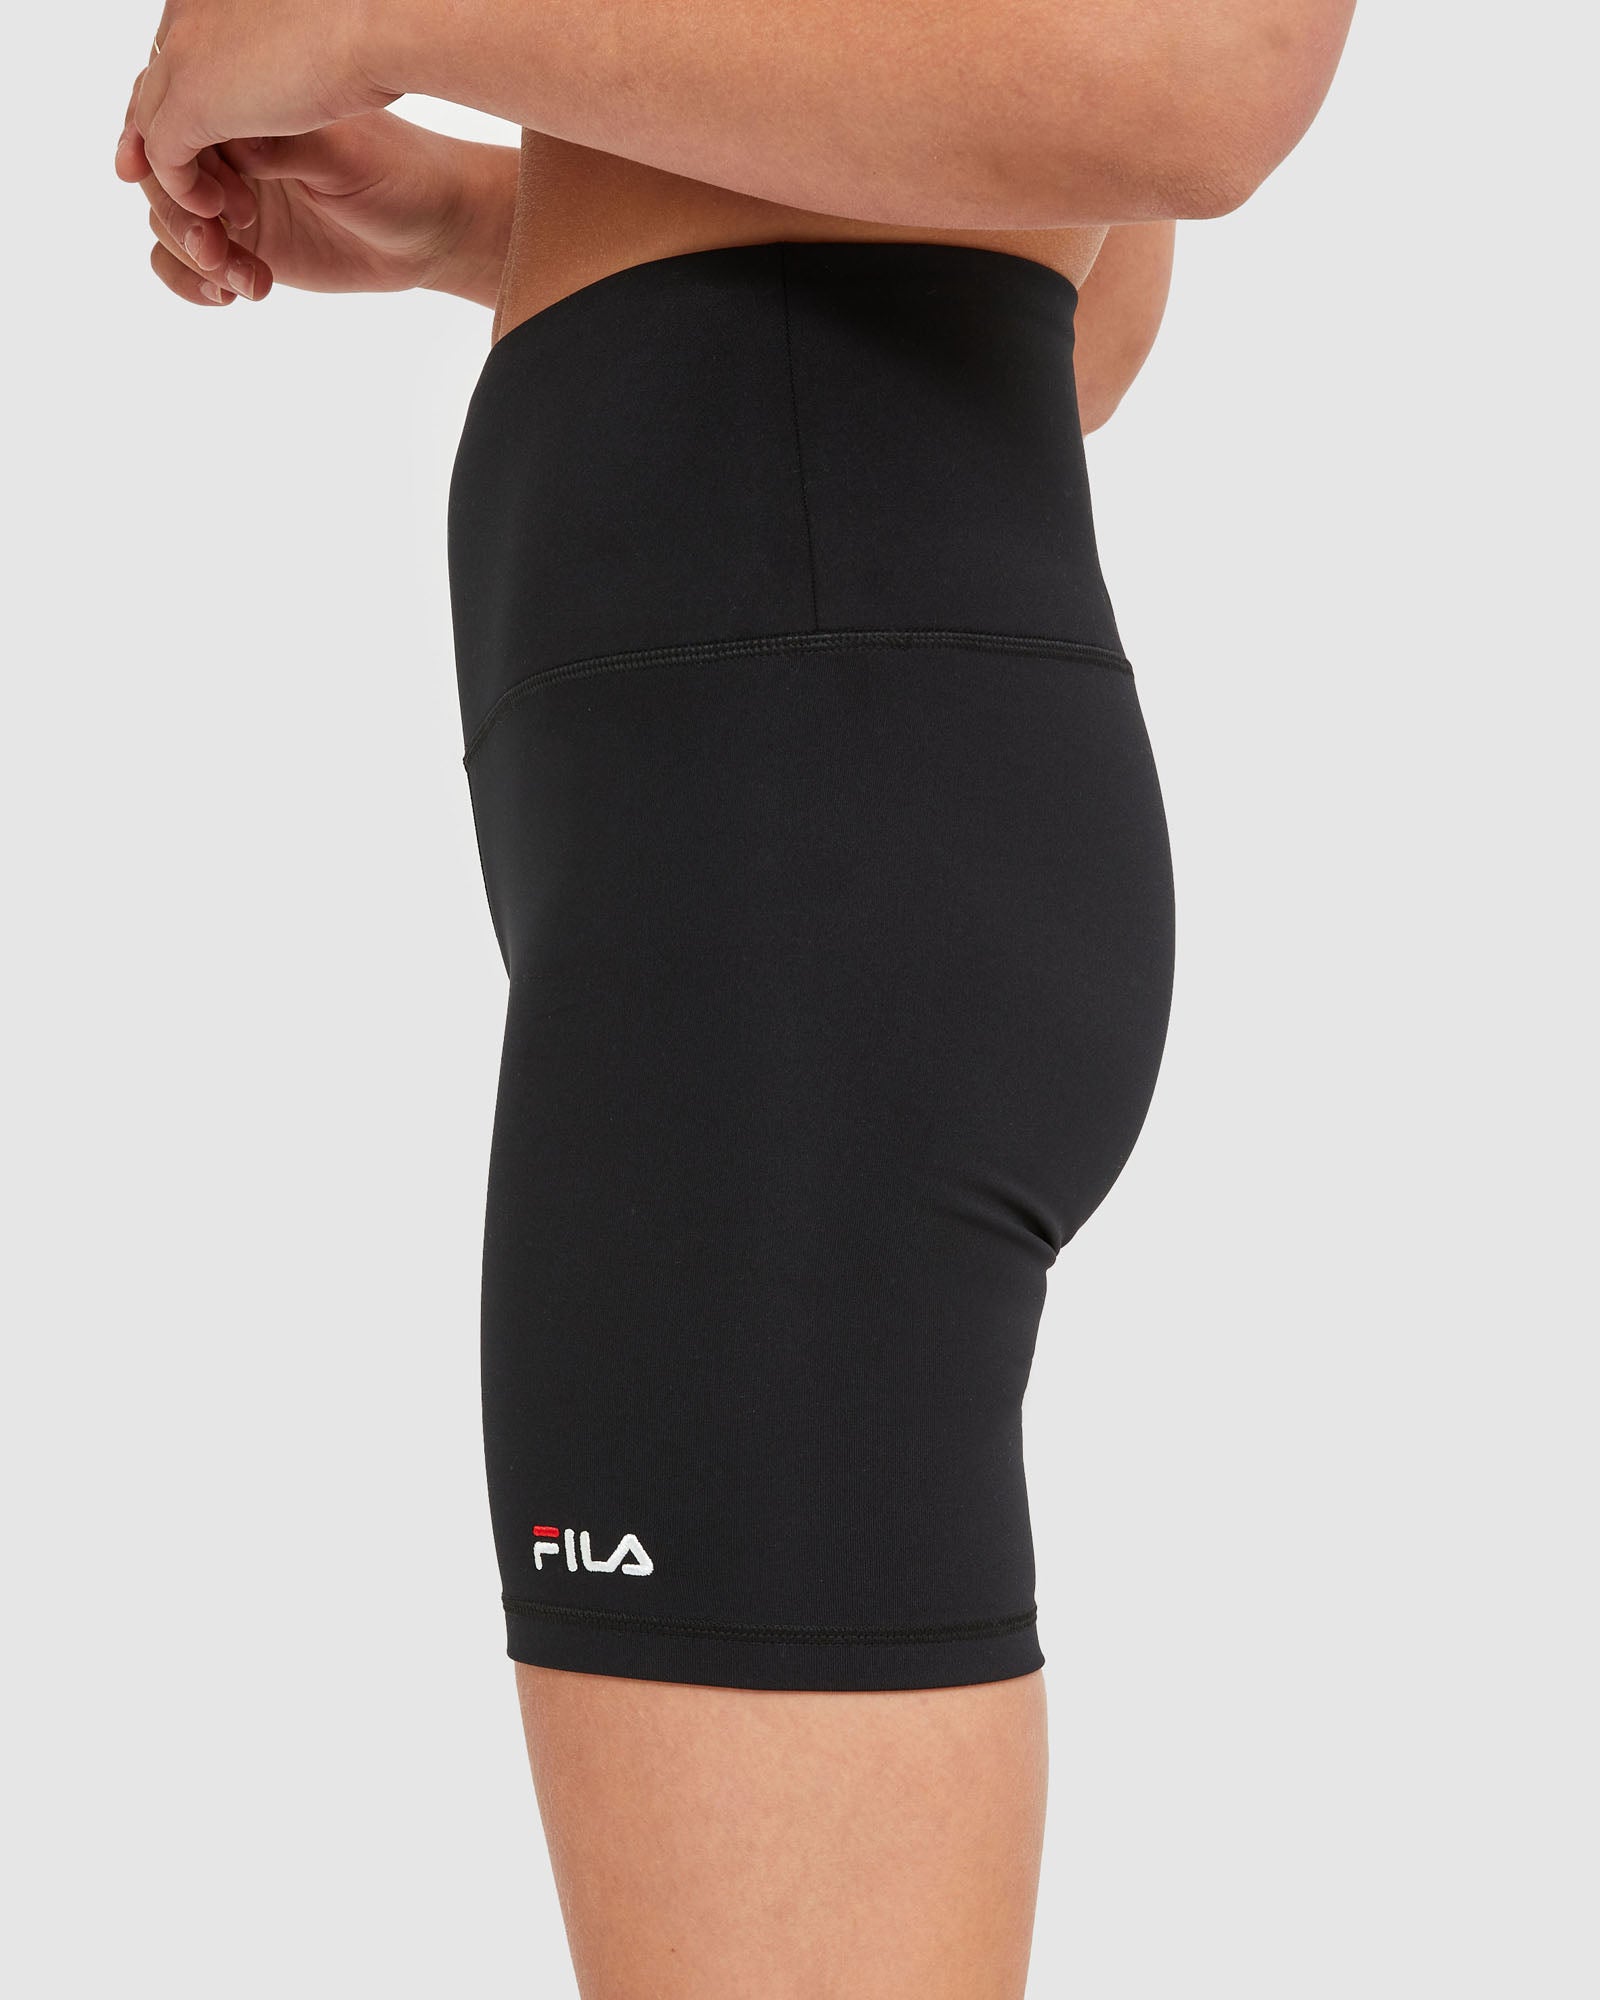 Misverstand Deter Salie Classic Women's Bike Shorts | FILA Australia